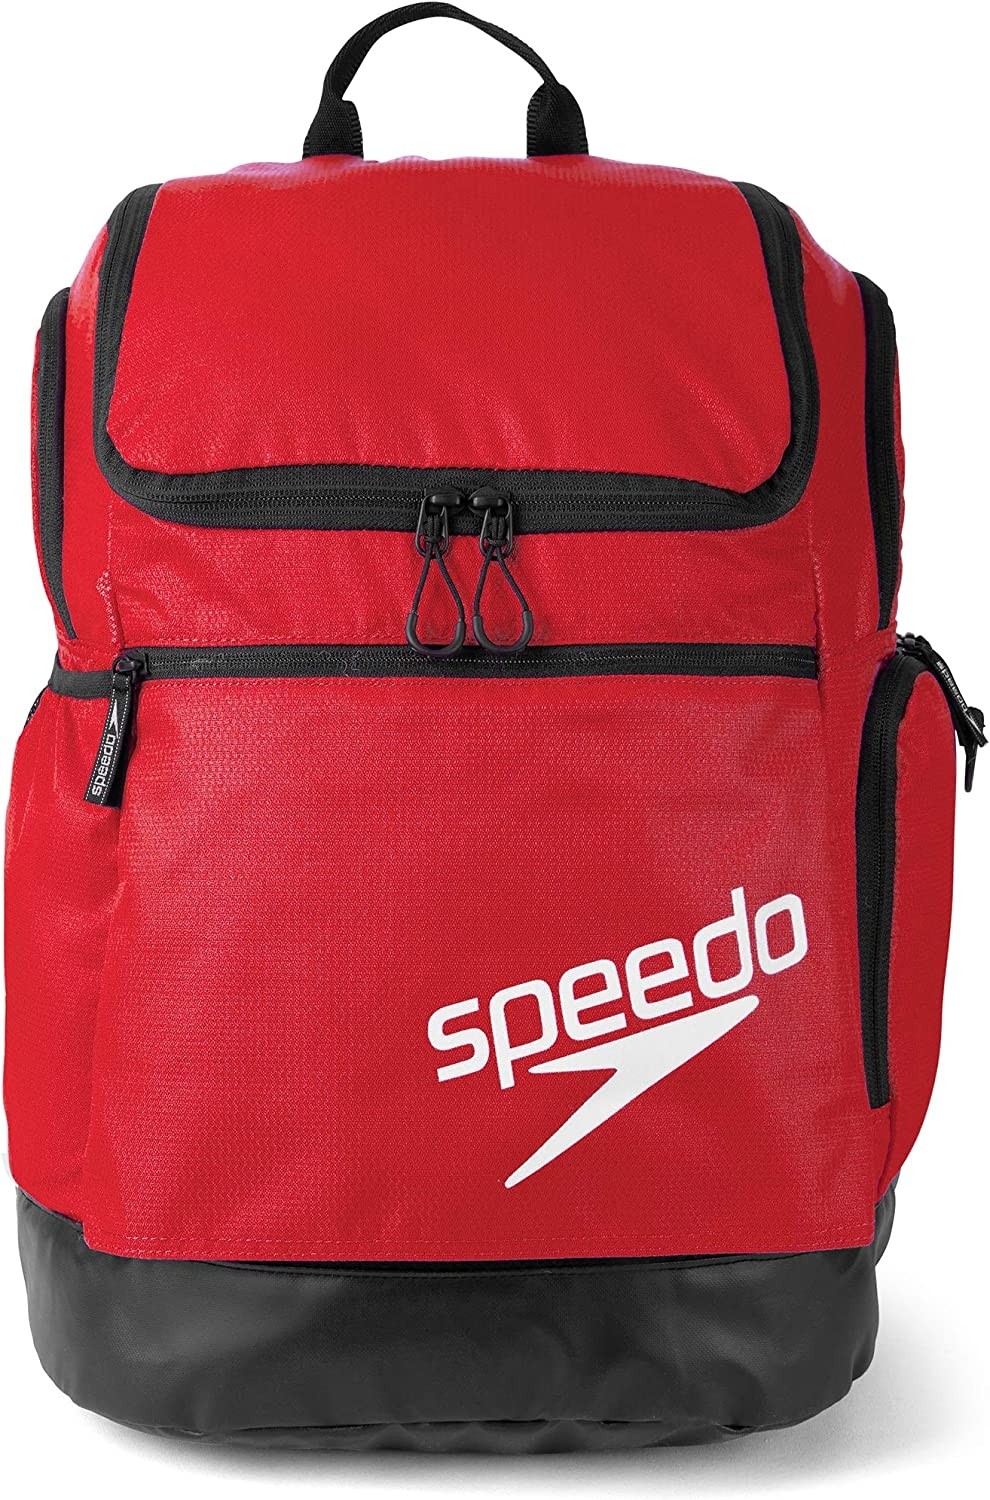 Speedo Teamster 2.0 Rucksack - Red